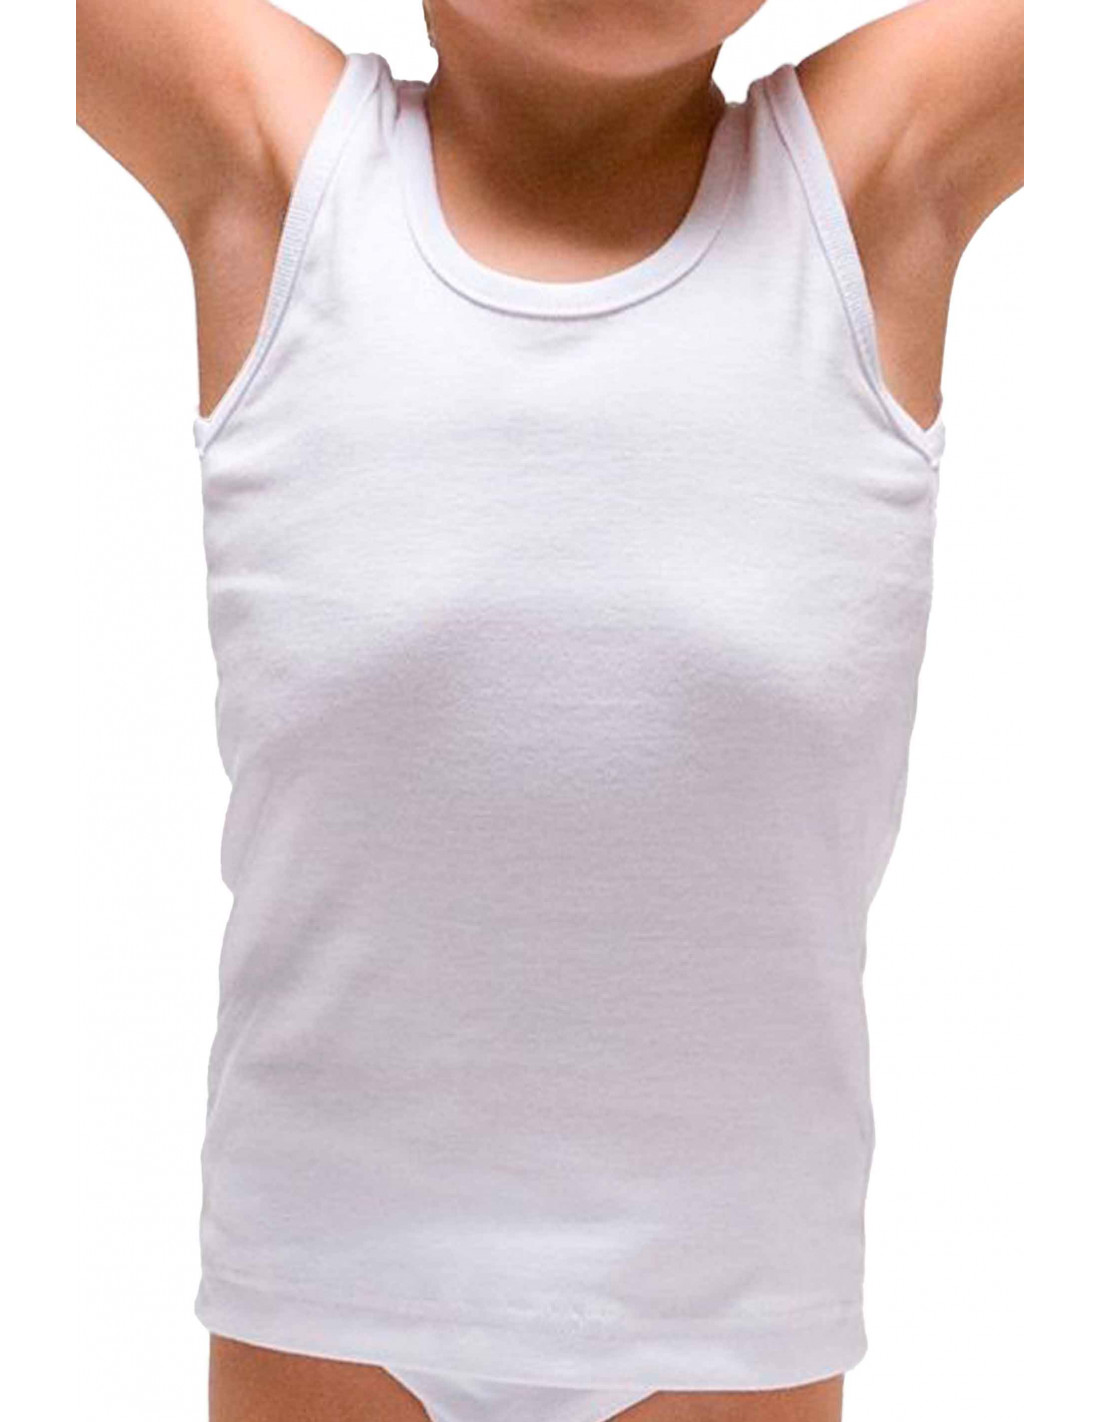 Camiseta interior infantil sin mangas de algodón, blanco